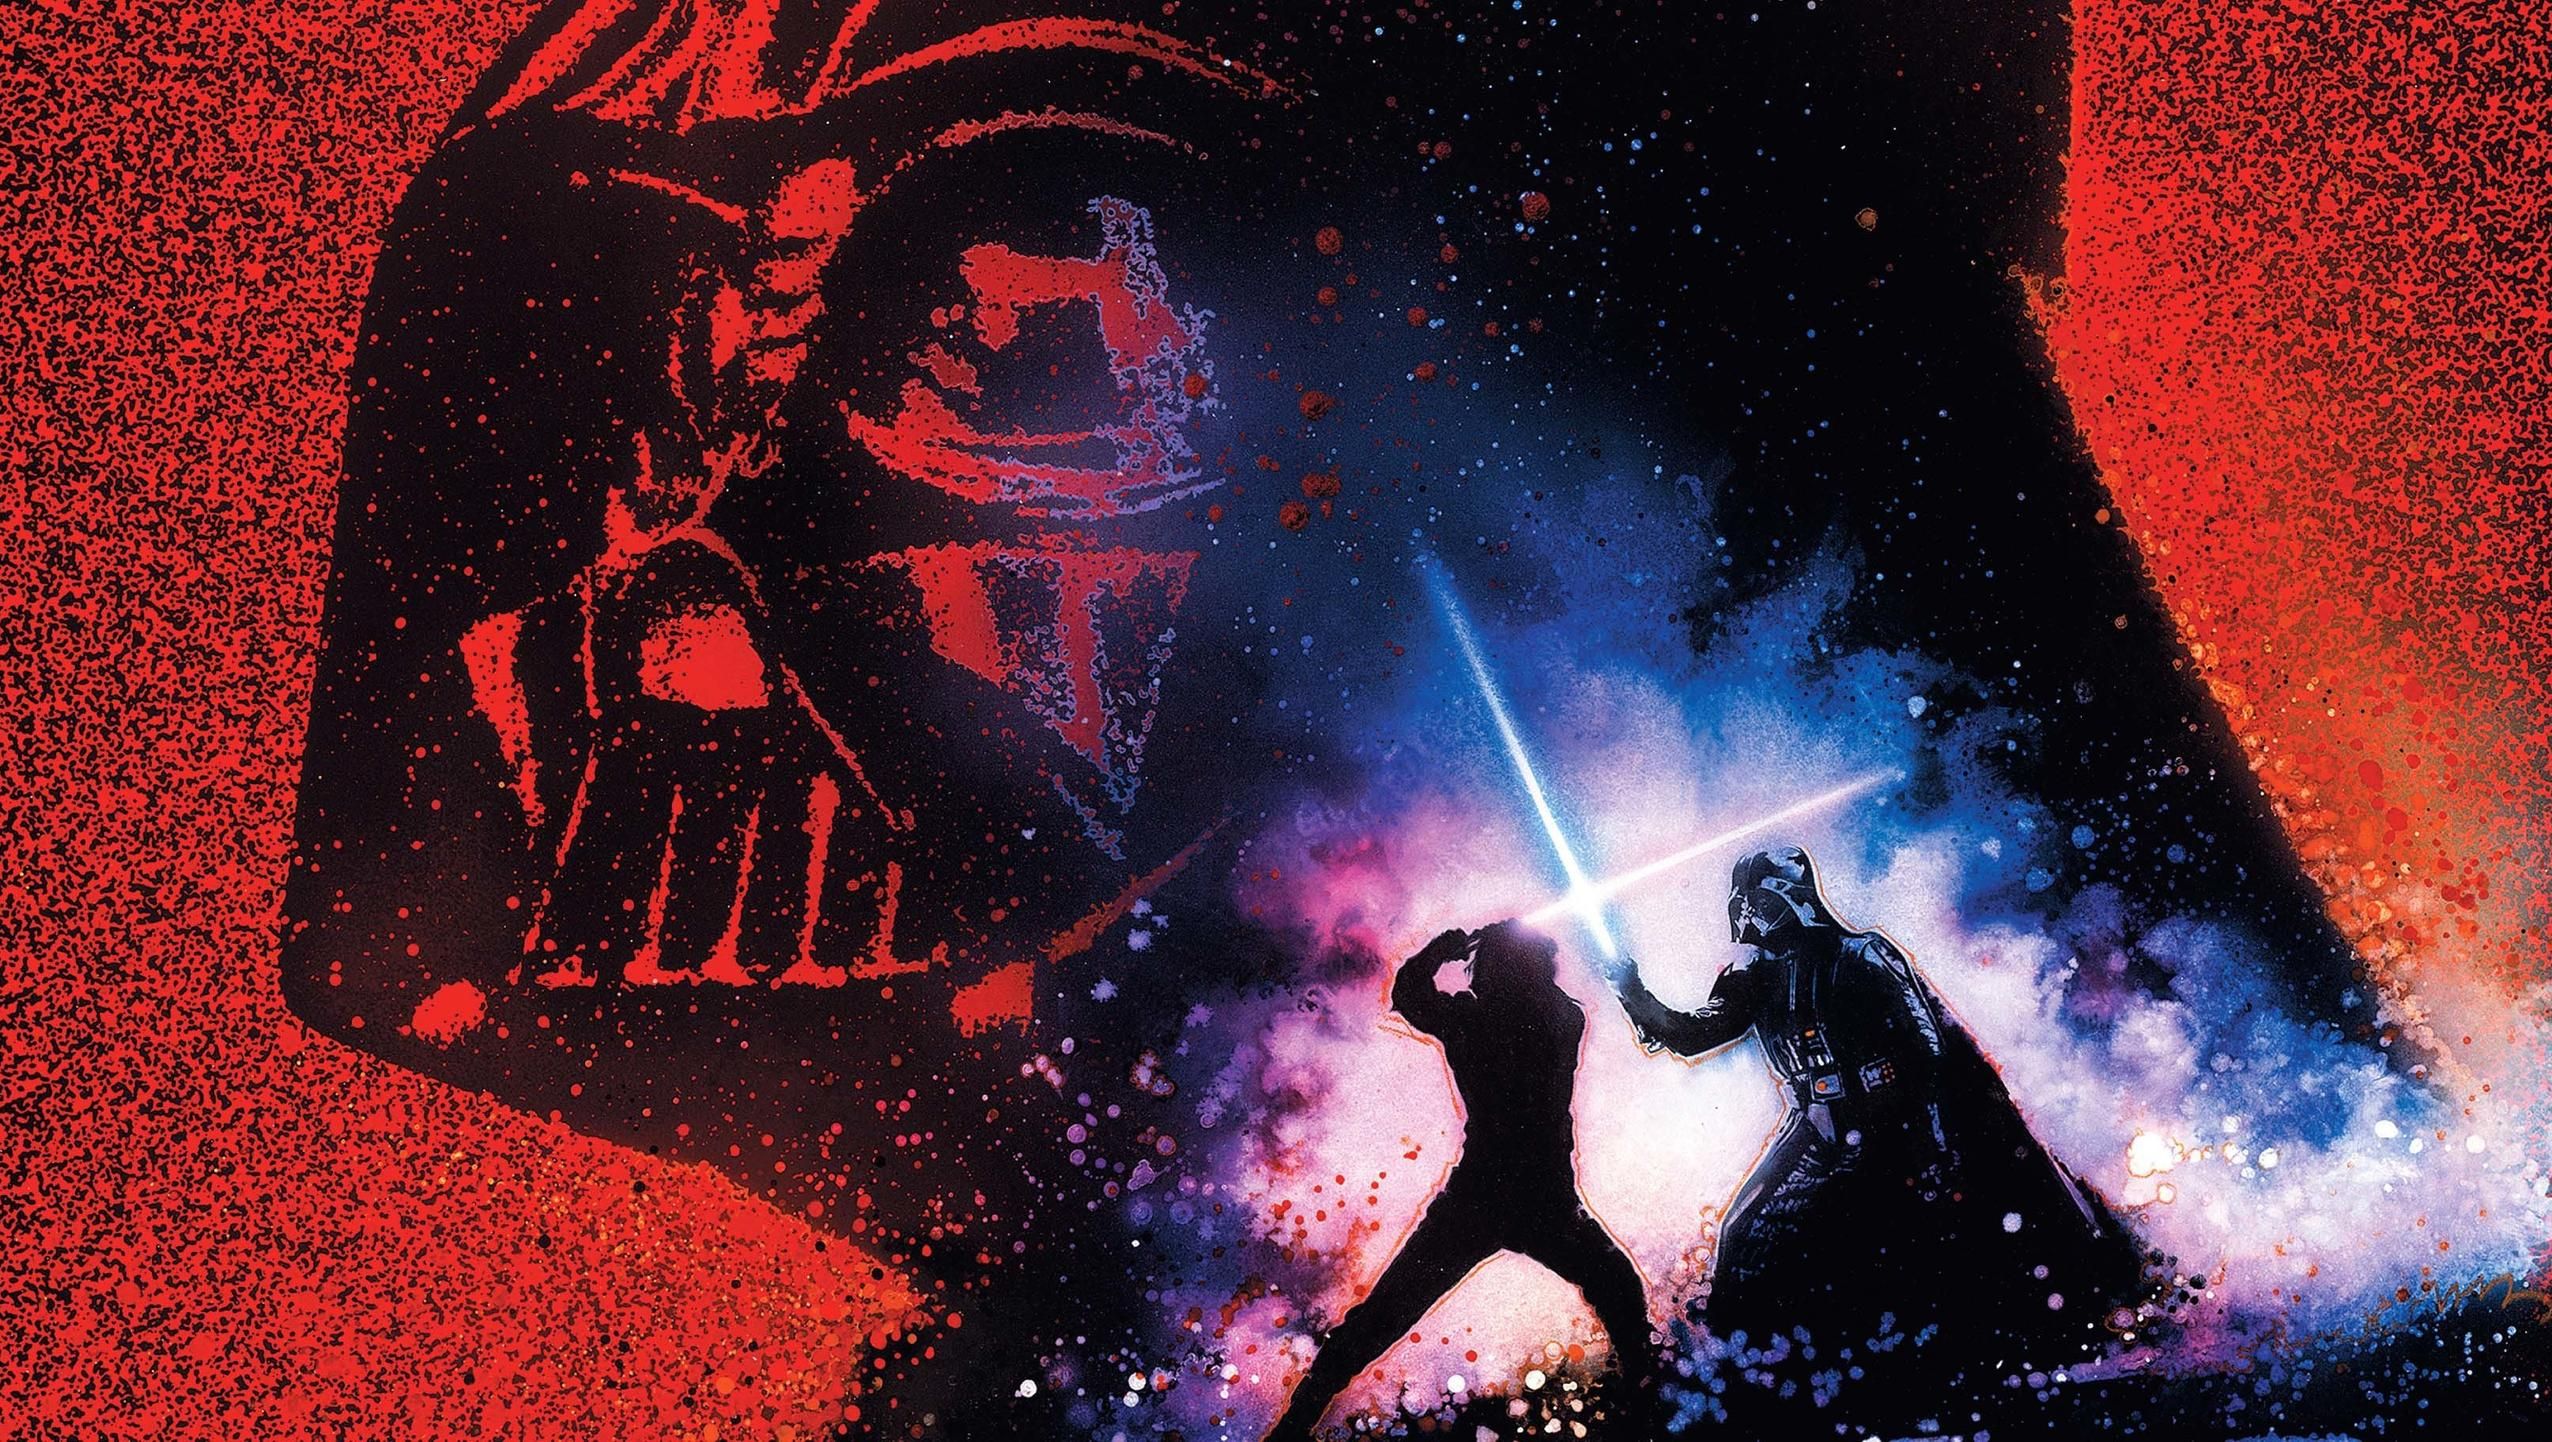 Return of the Jedi (1983) Desktop Wallpaper. Moviemania. Star wars wallpaper, Star wars episodes, Star wars wallpaper desktop